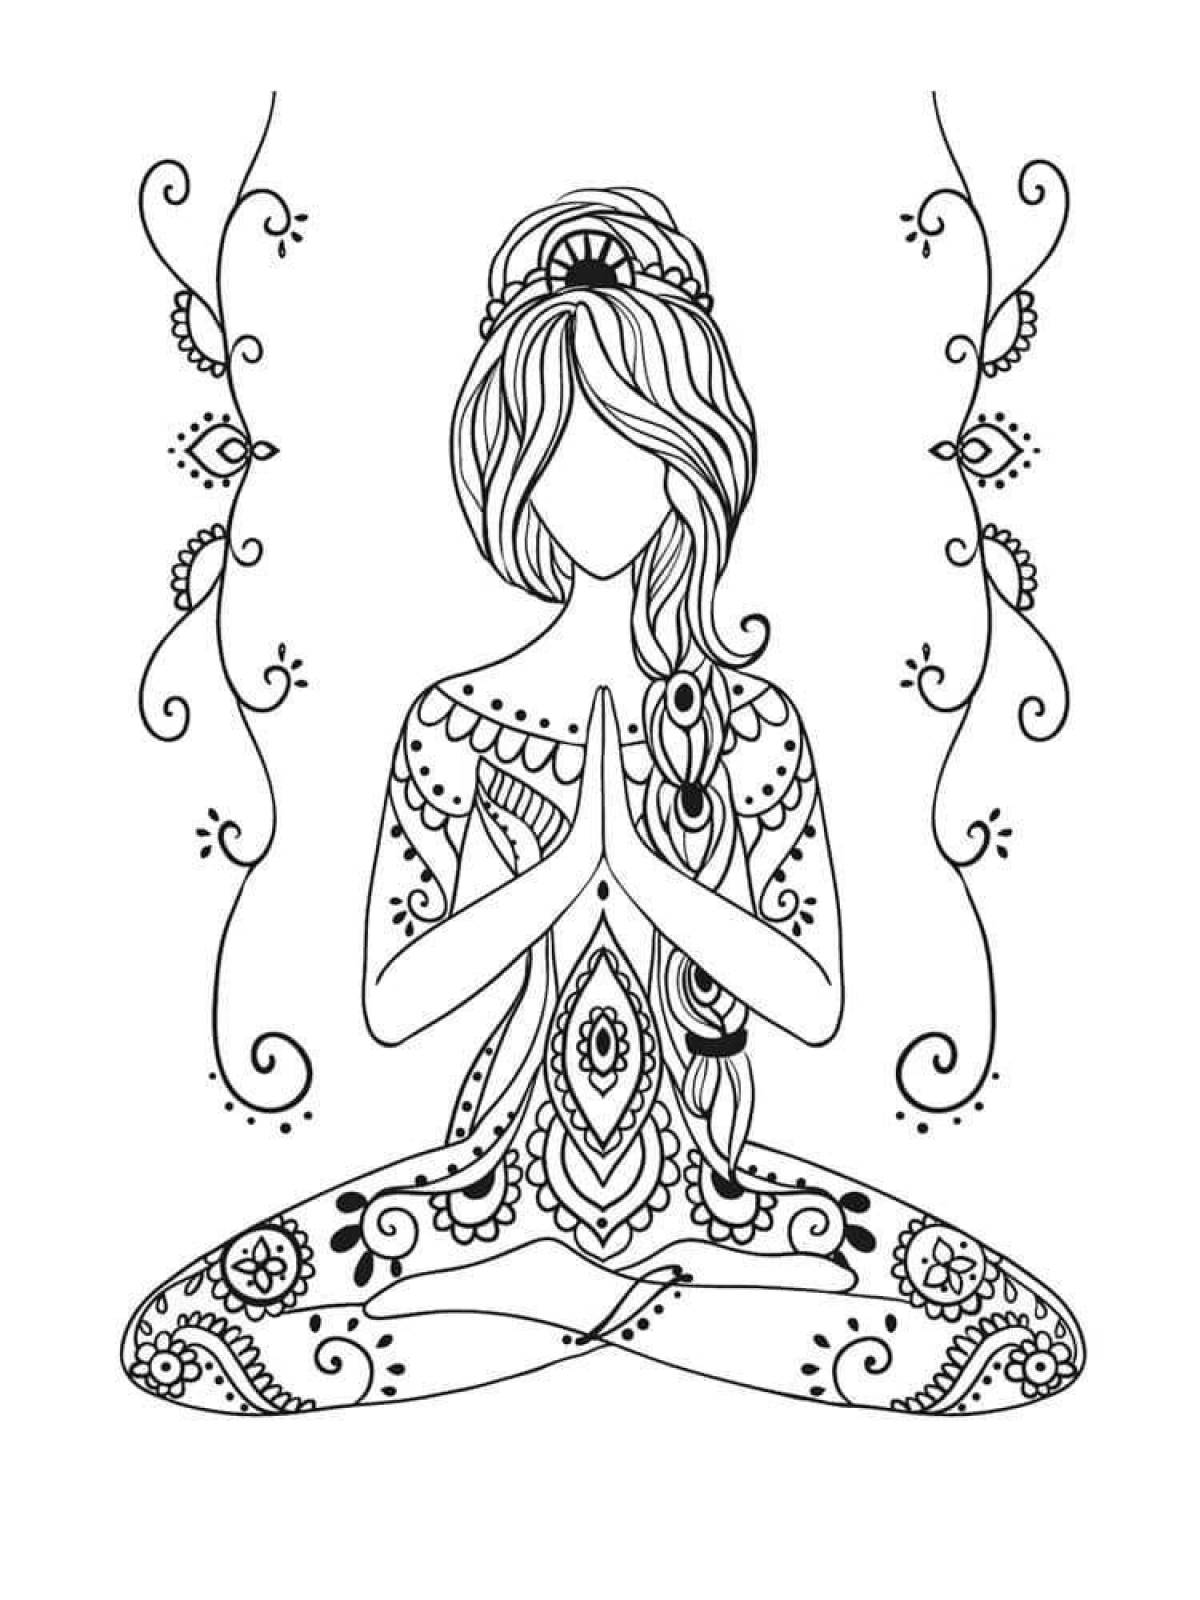 Compassionate meditation coloring book